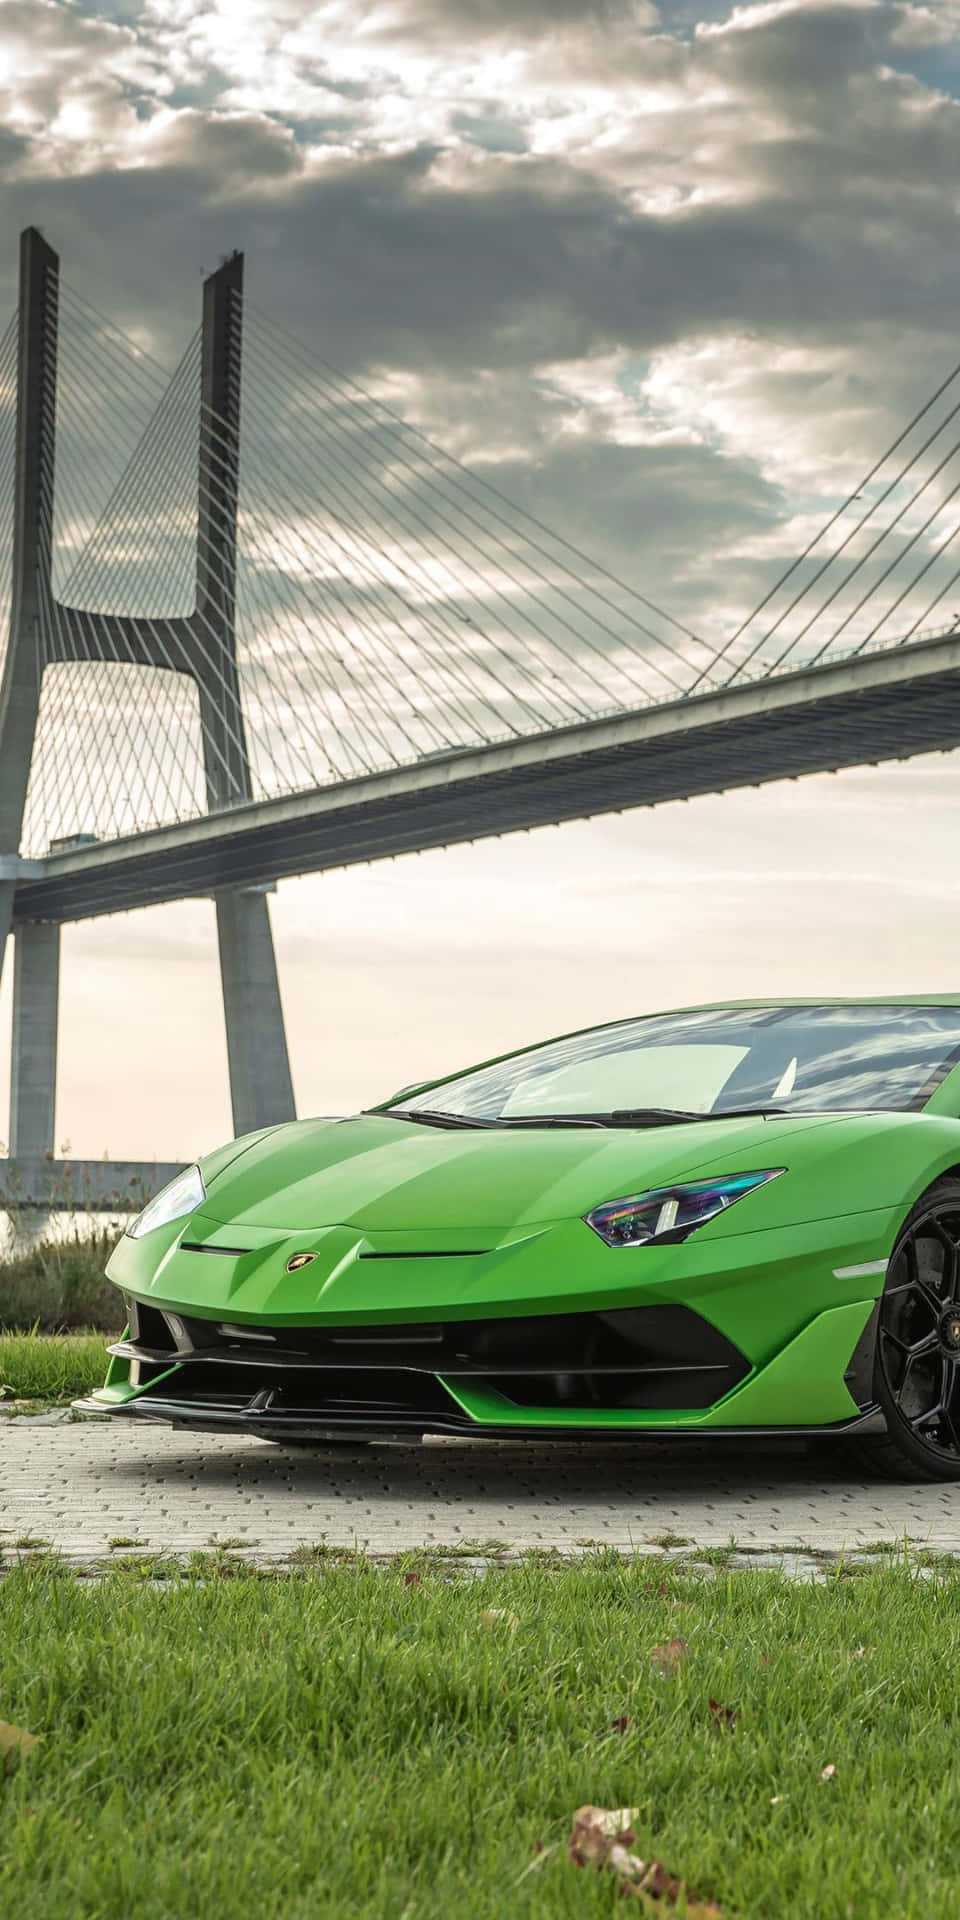 Fahrestilvoll Mit Einem Grünen Lamborghini Iphone Wallpaper